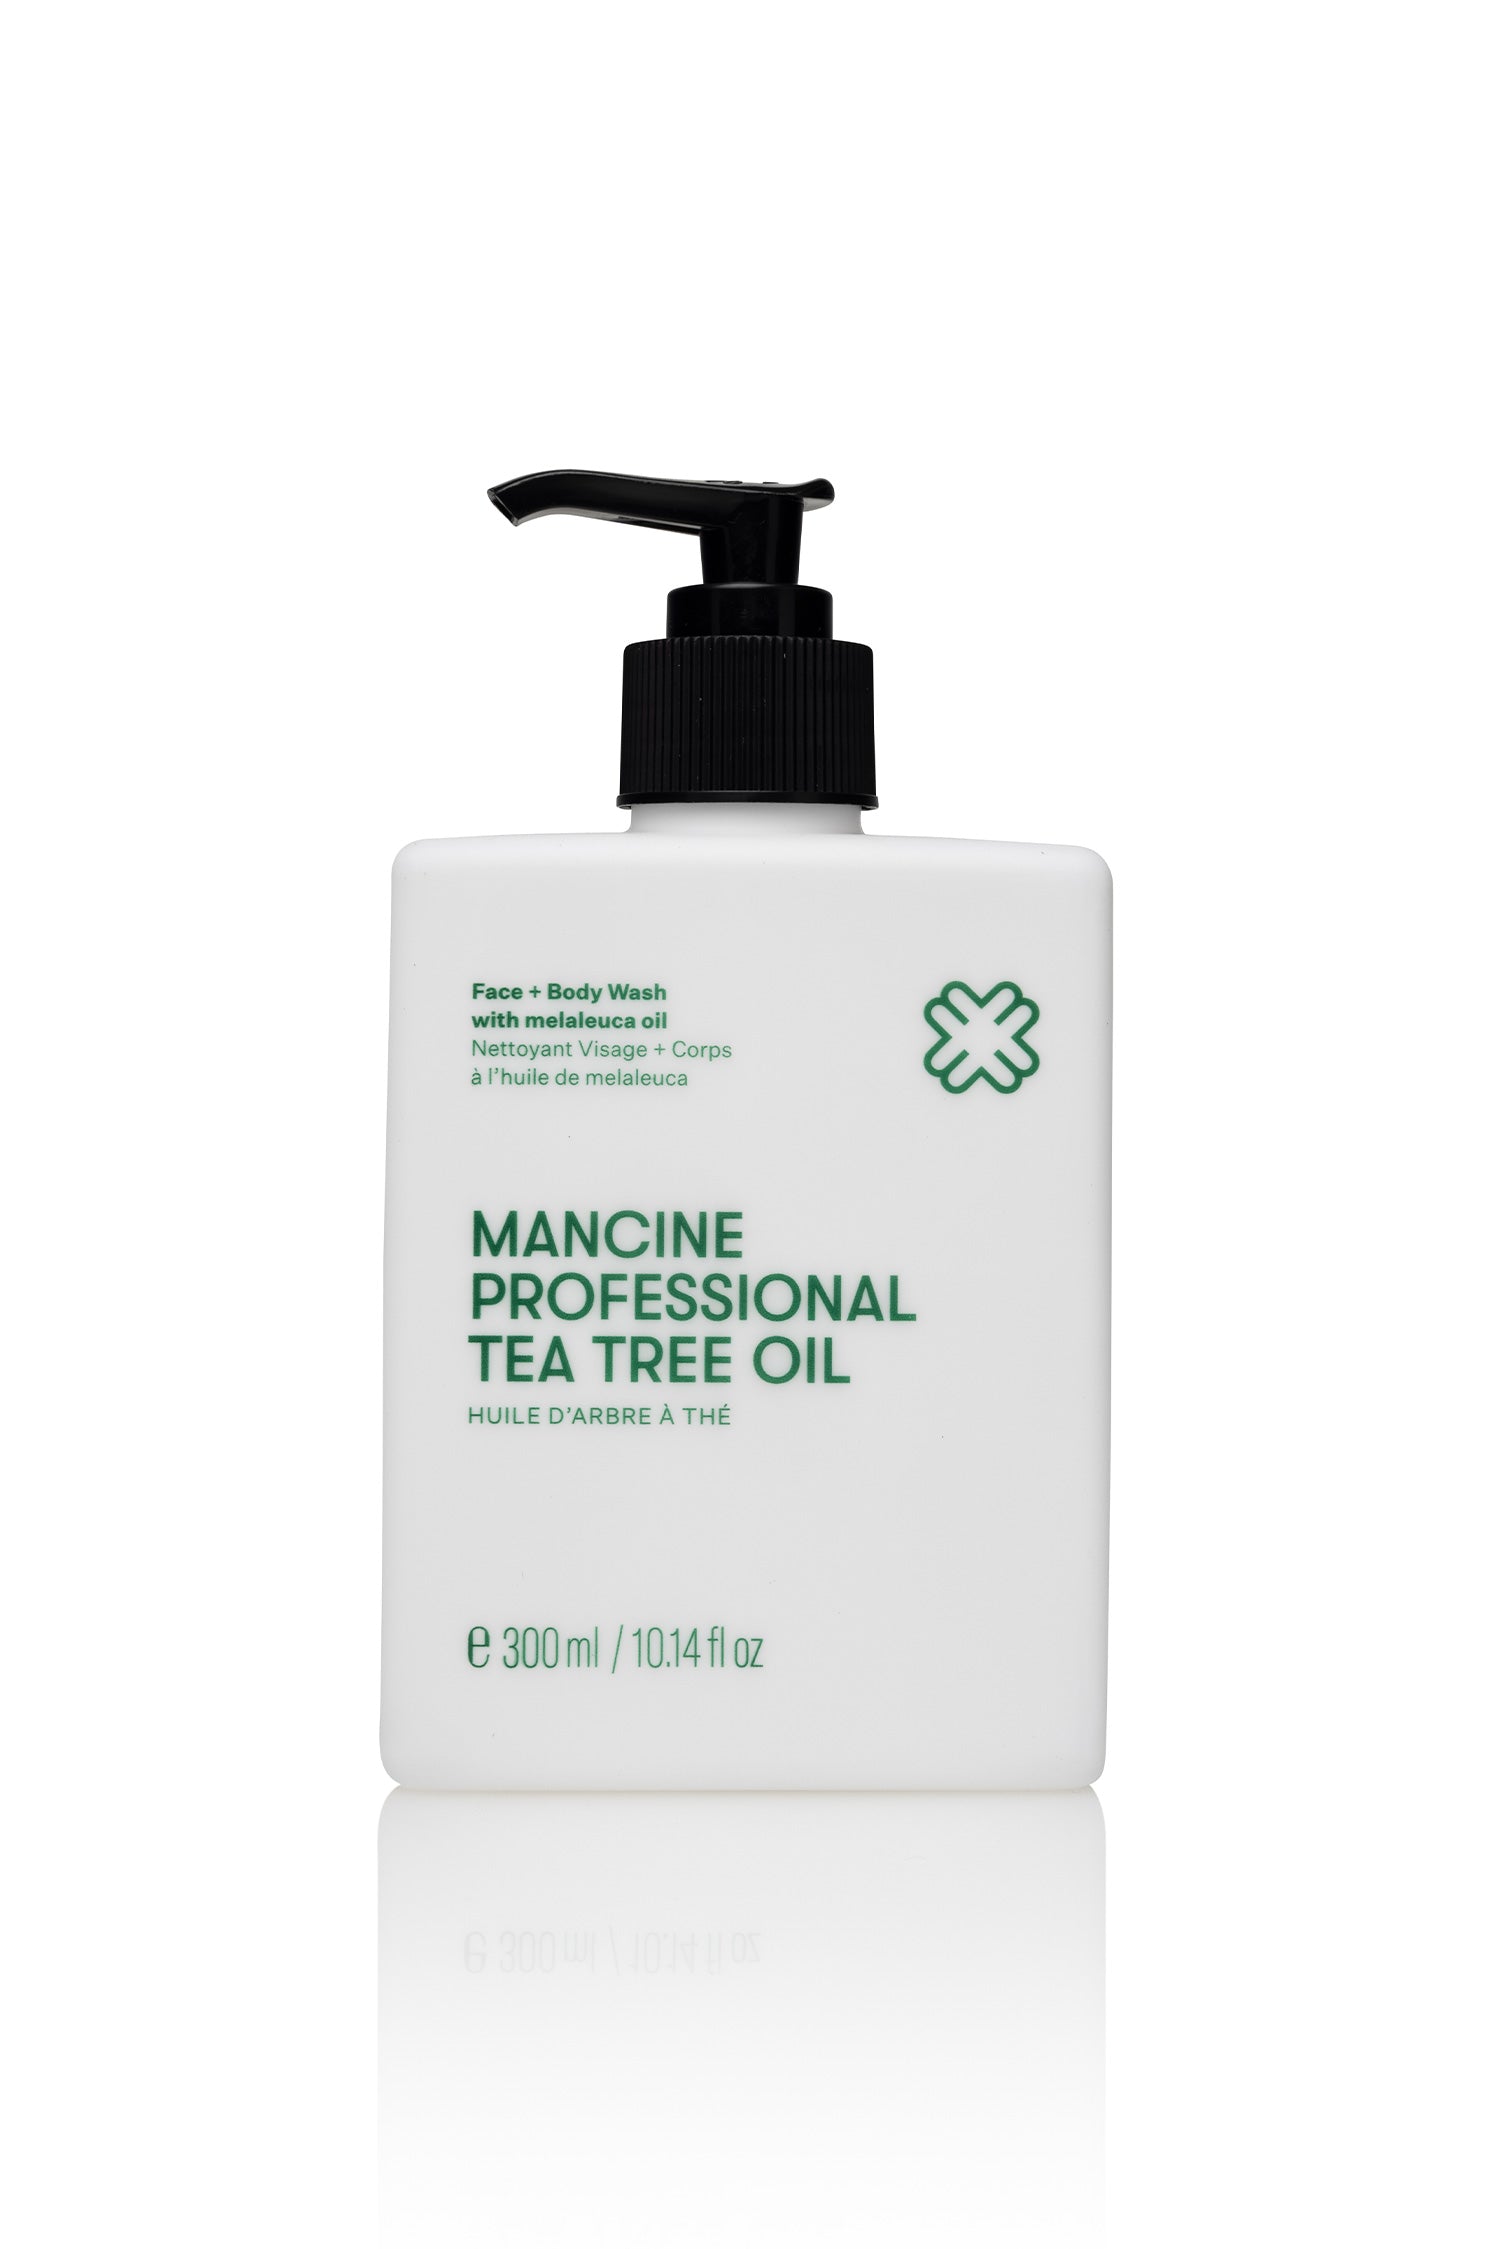 Mancine Professional Tea Tree Oil / Face + Body Wash 300ml